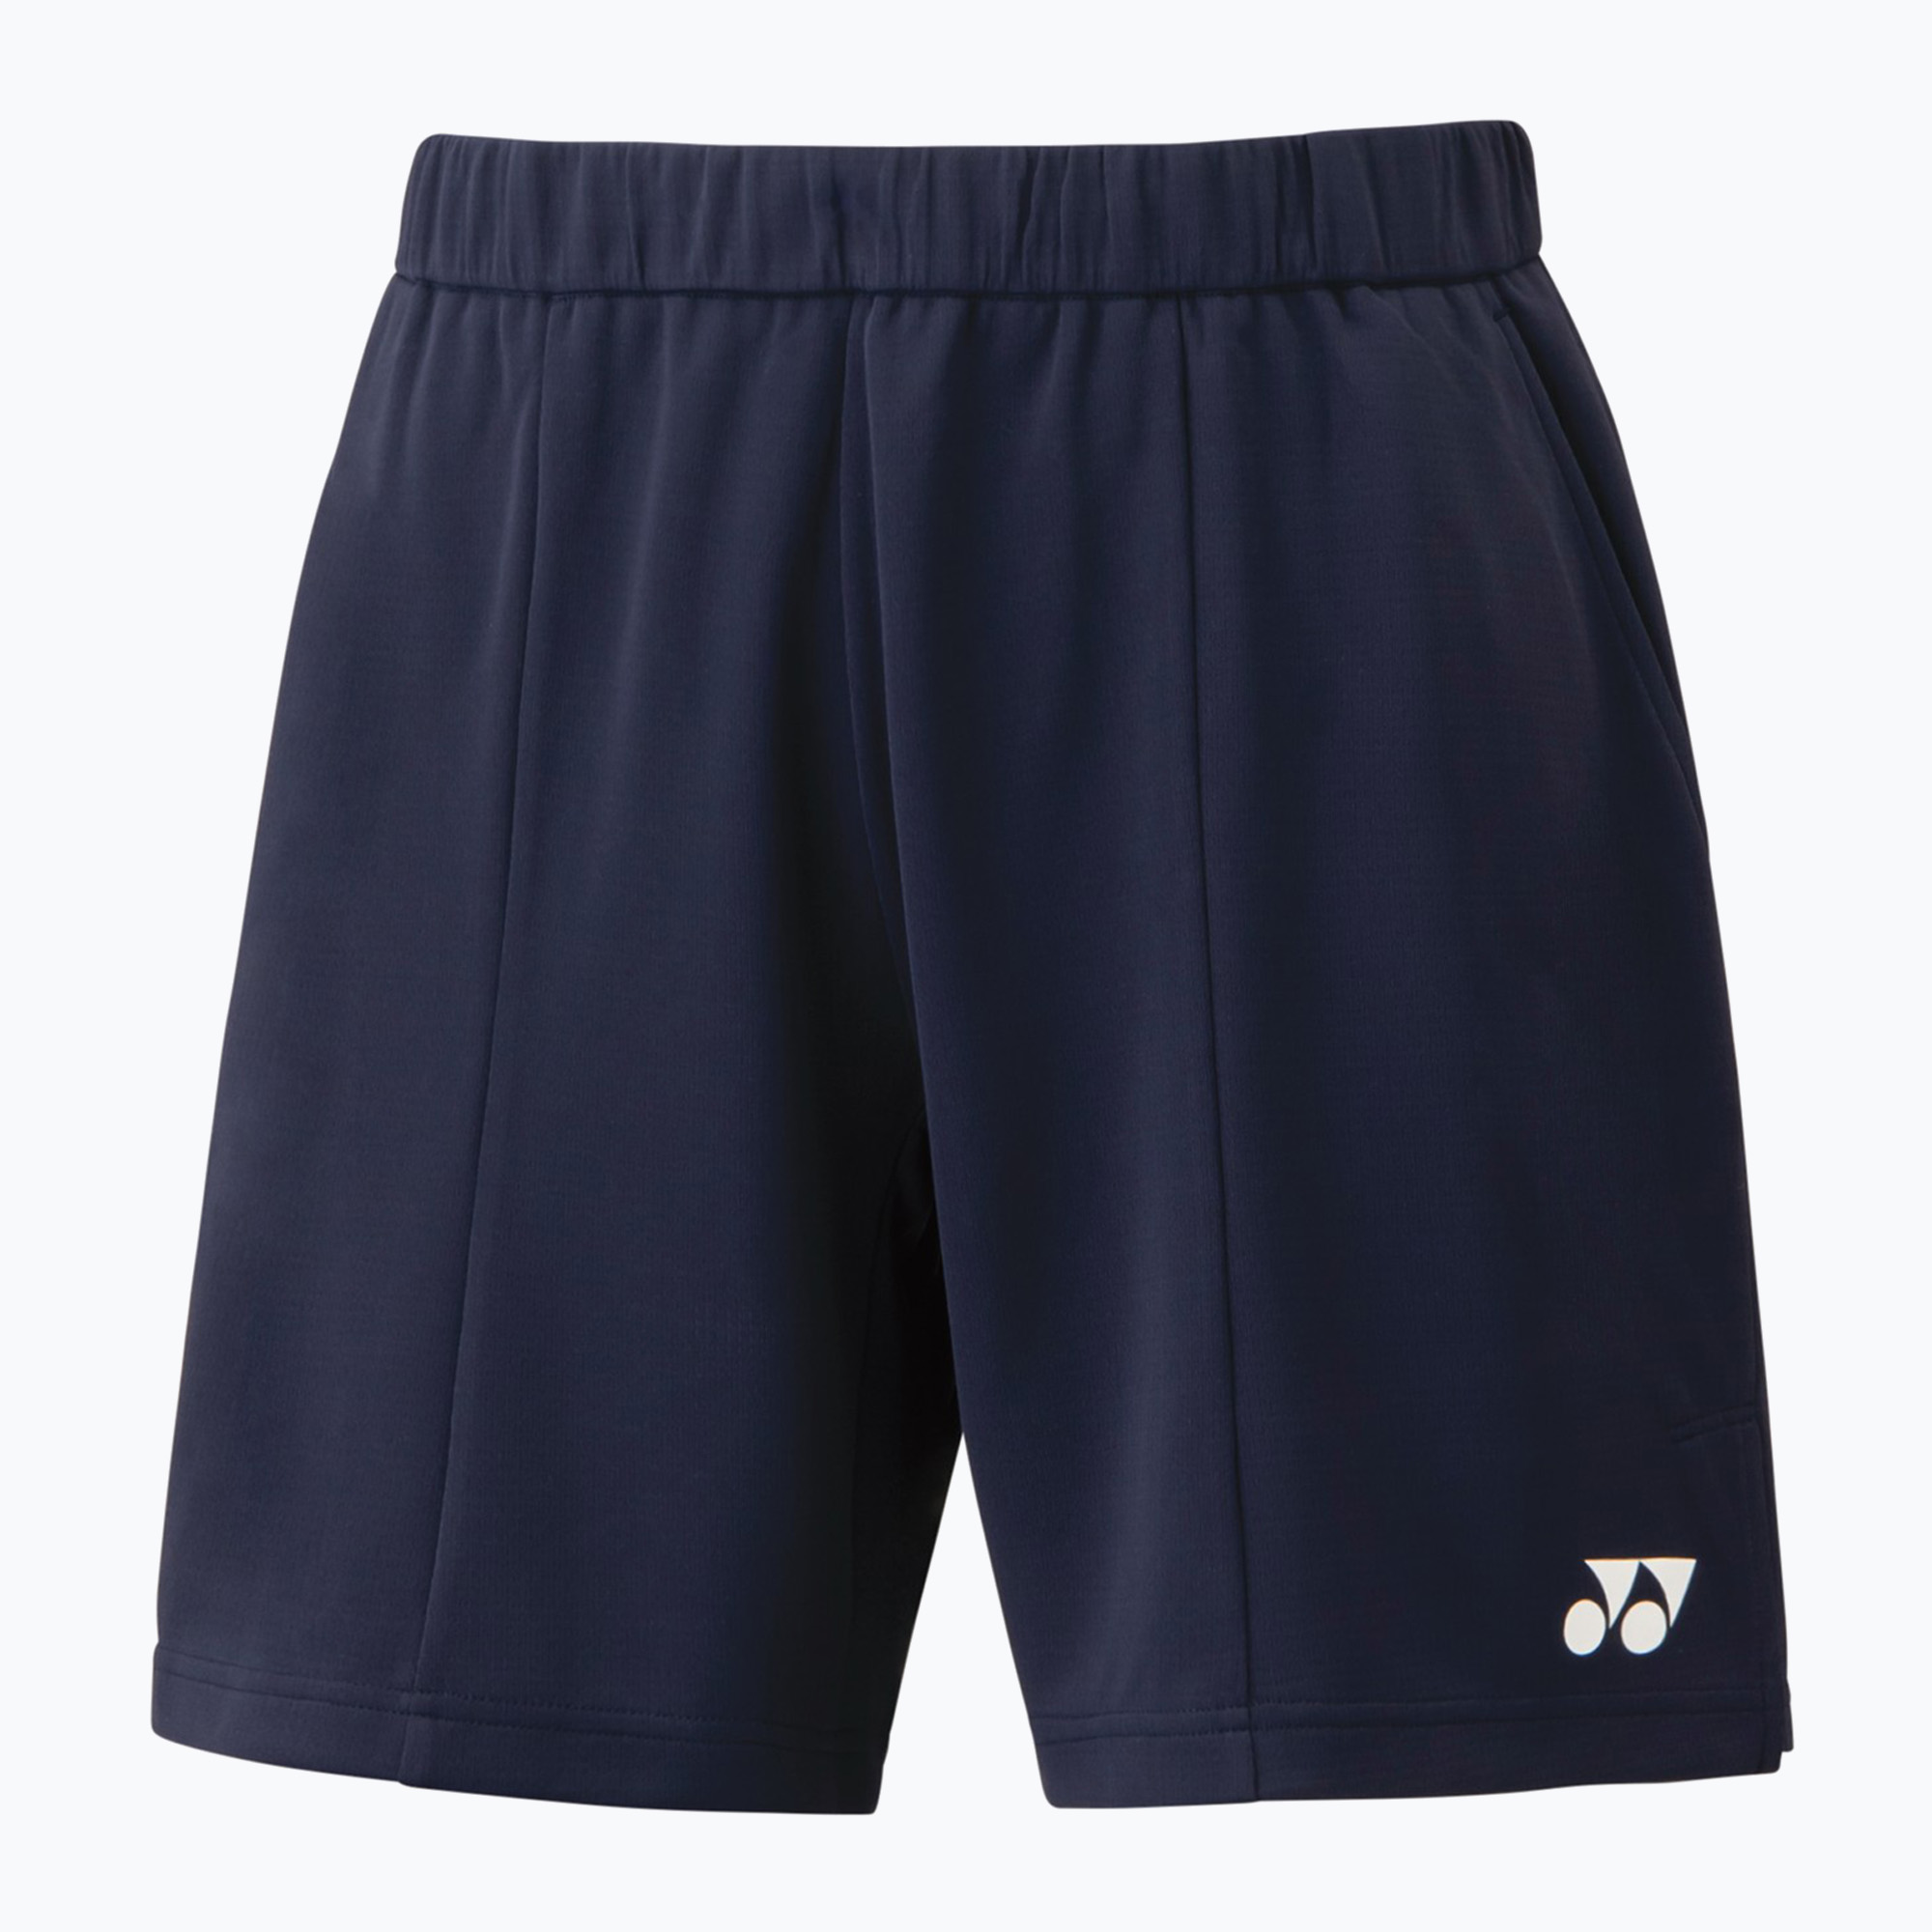 Мъжки шорти за тенис YONEX Knit navy blue CSM151383NB